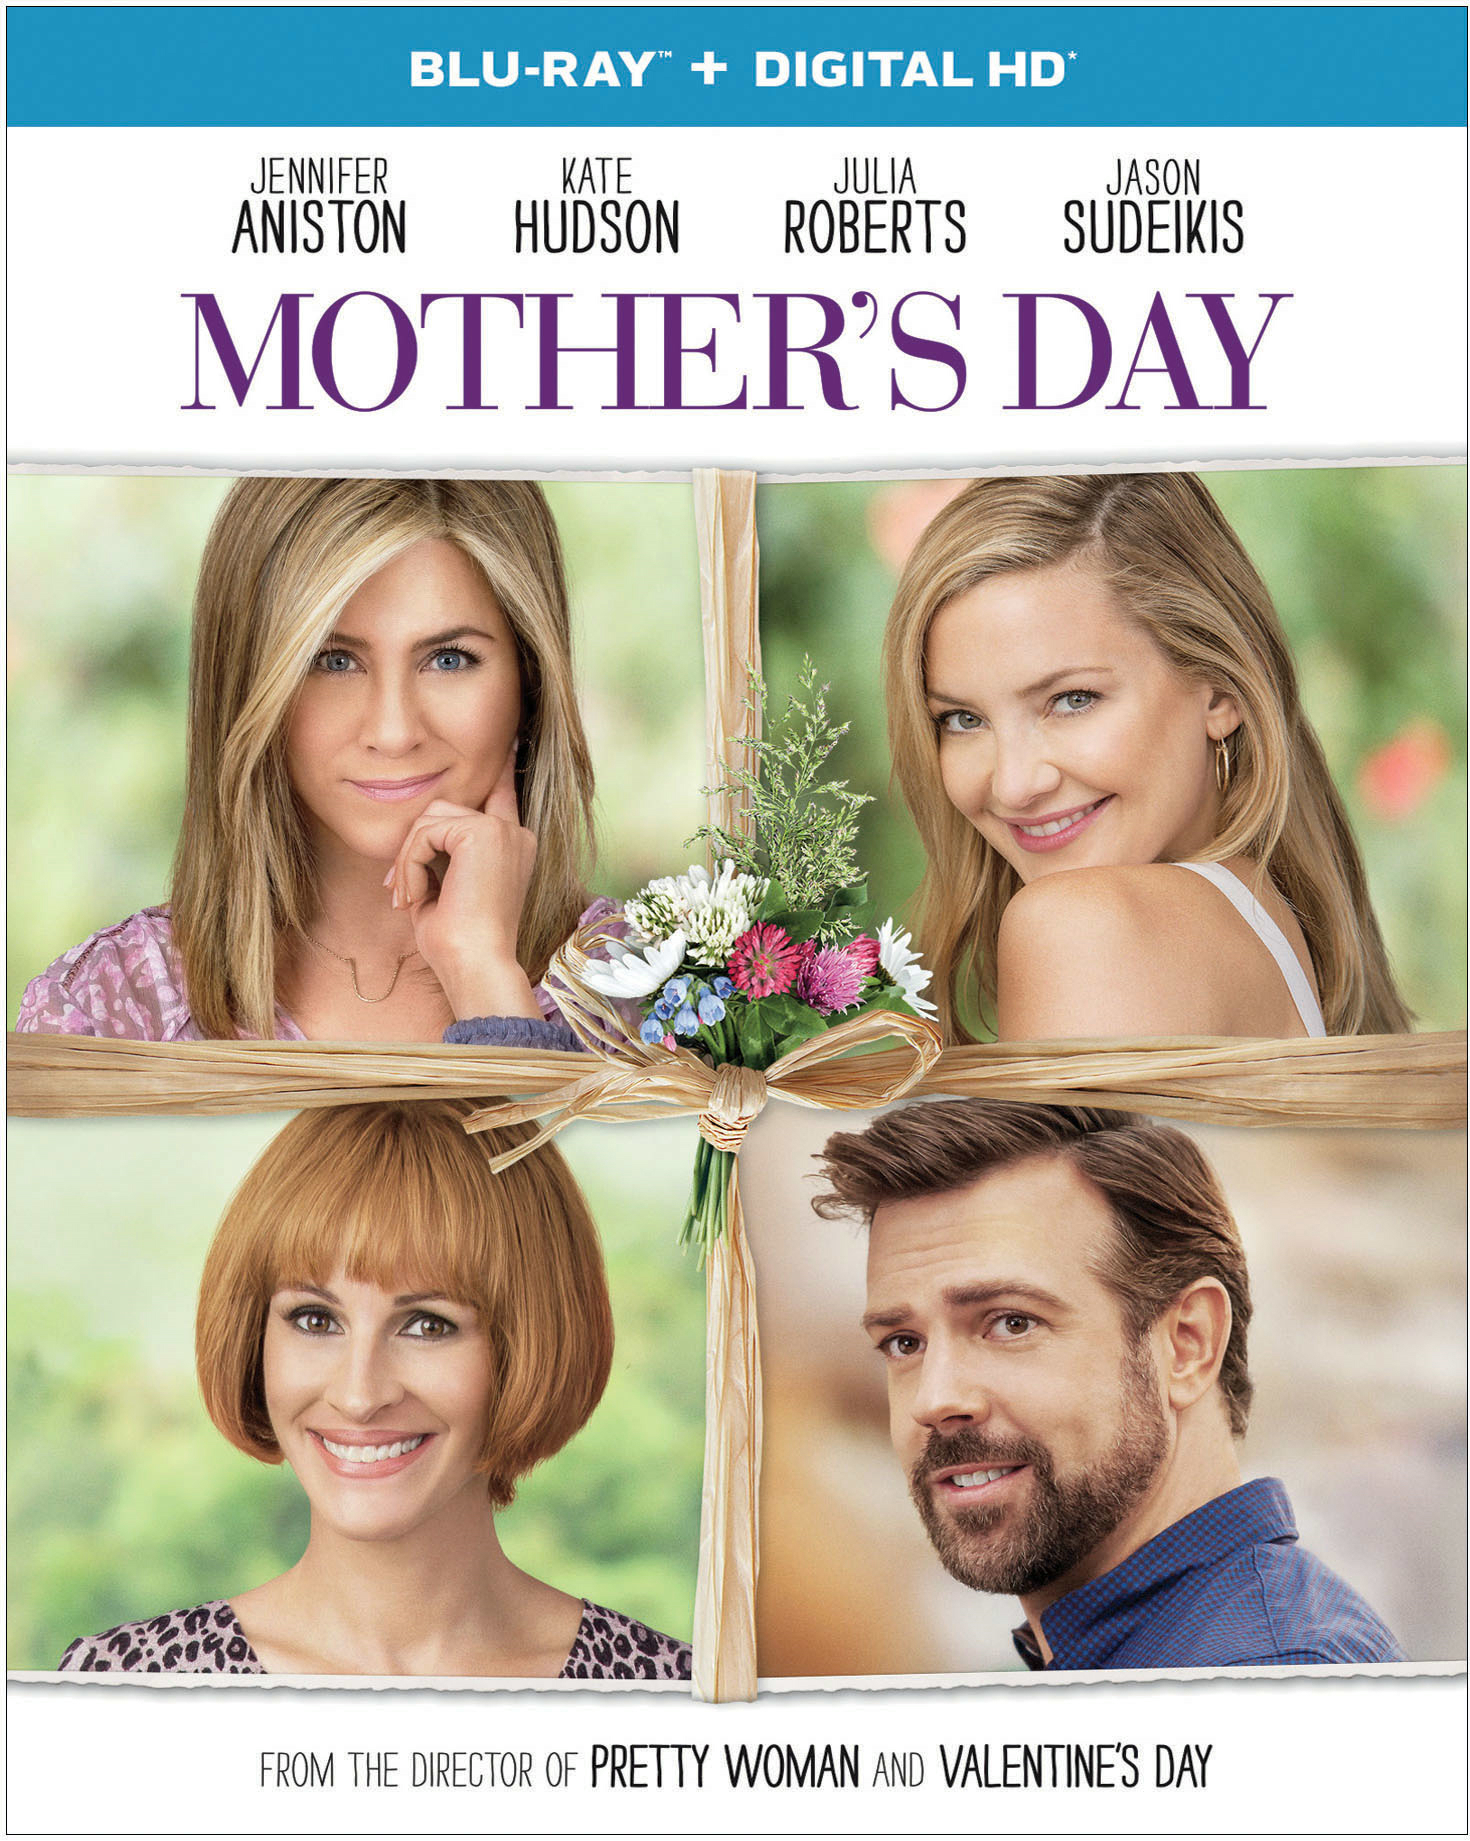 Mother's Day (Blu-ray + Digital HD) - Blu-ray [ 2016 ]  - Comedy Movies On Blu-ray - Movies On GRUV